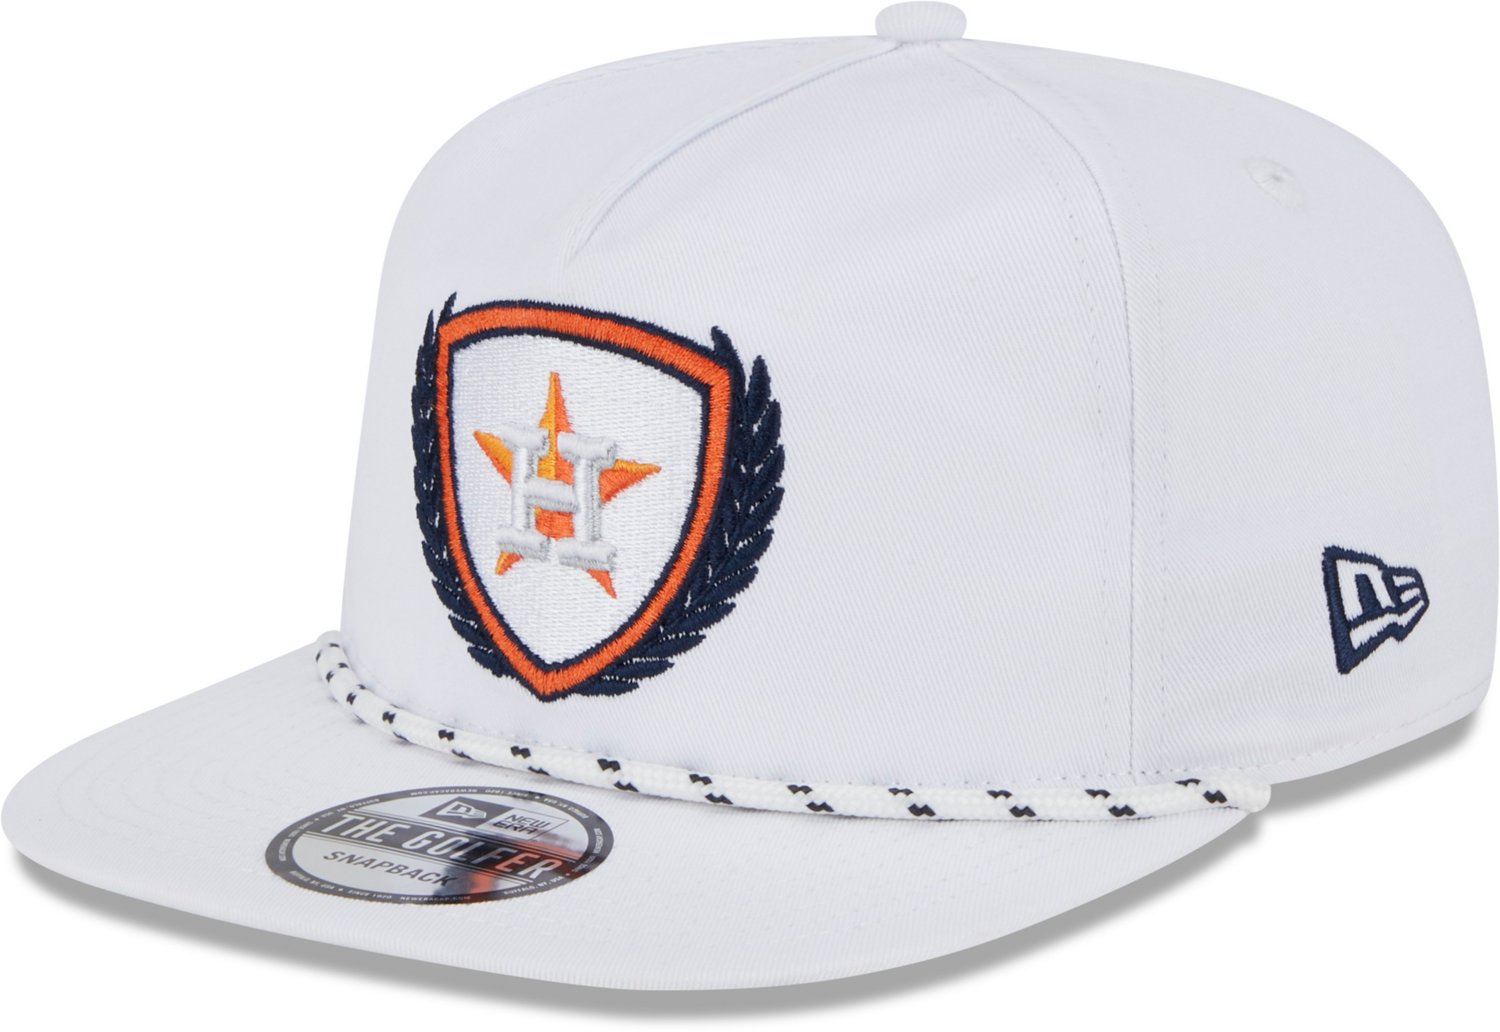 Men's New Era Camo Houston Astros Basic 9FIFTY Snapback Hat